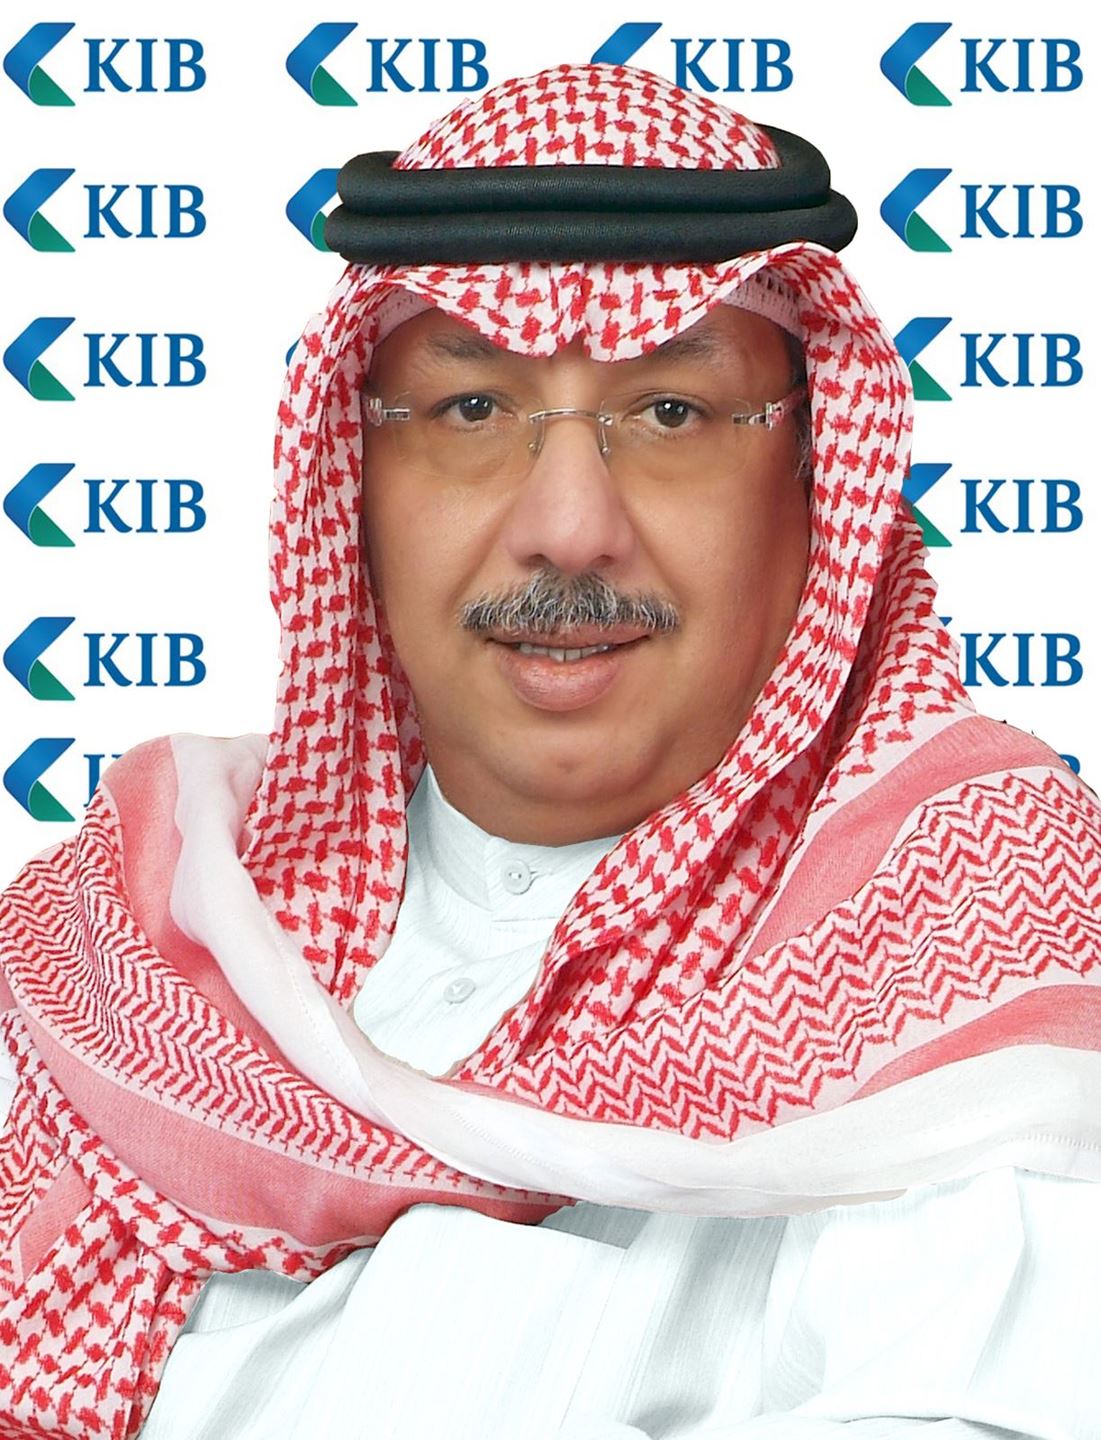 KIB records growth by 88% in net profit to reach KD 6 million